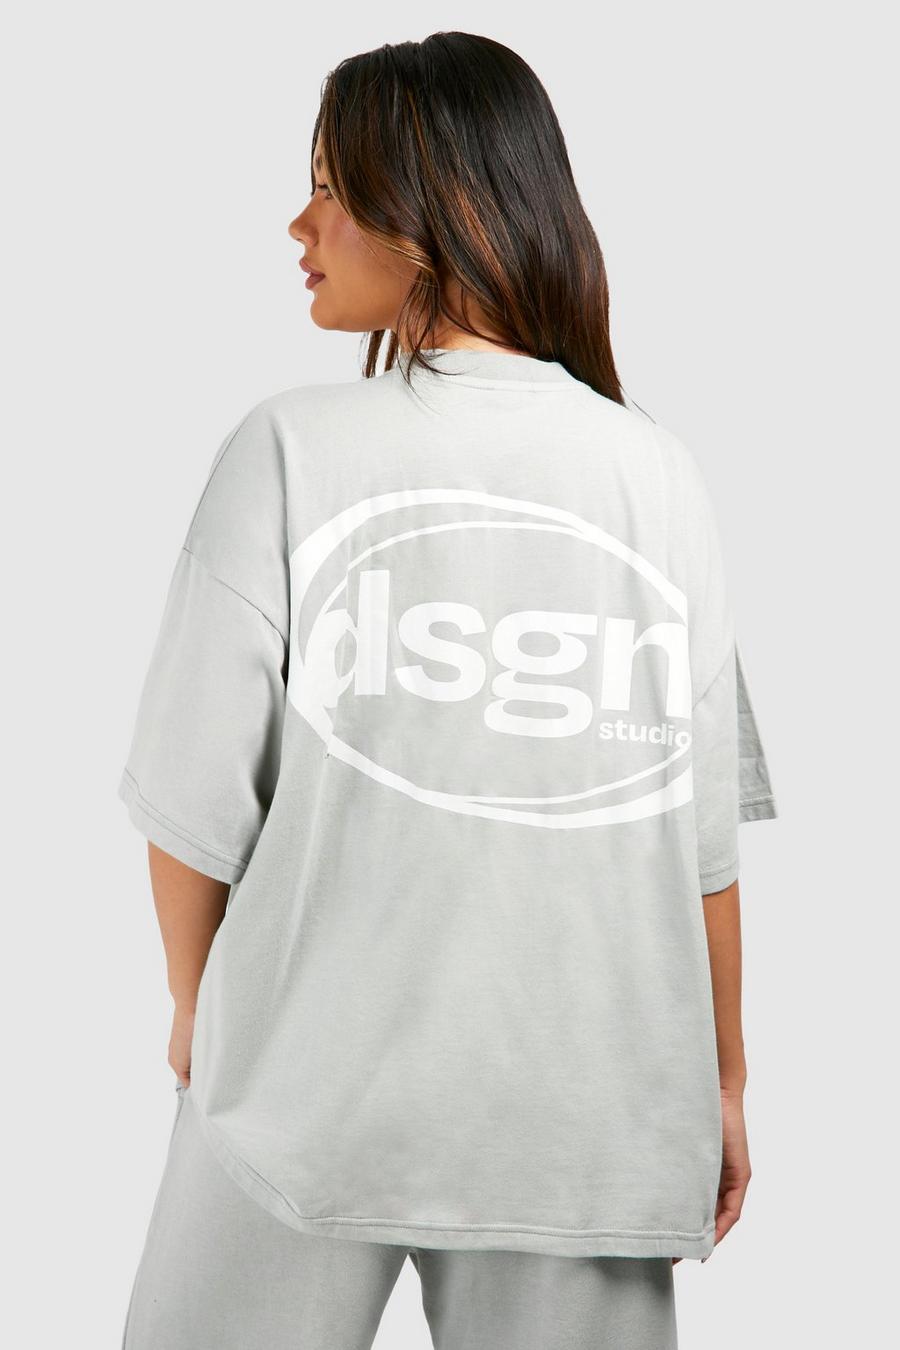 Oversize T-Shirt mit Dsgn Studio Print, Ice grey